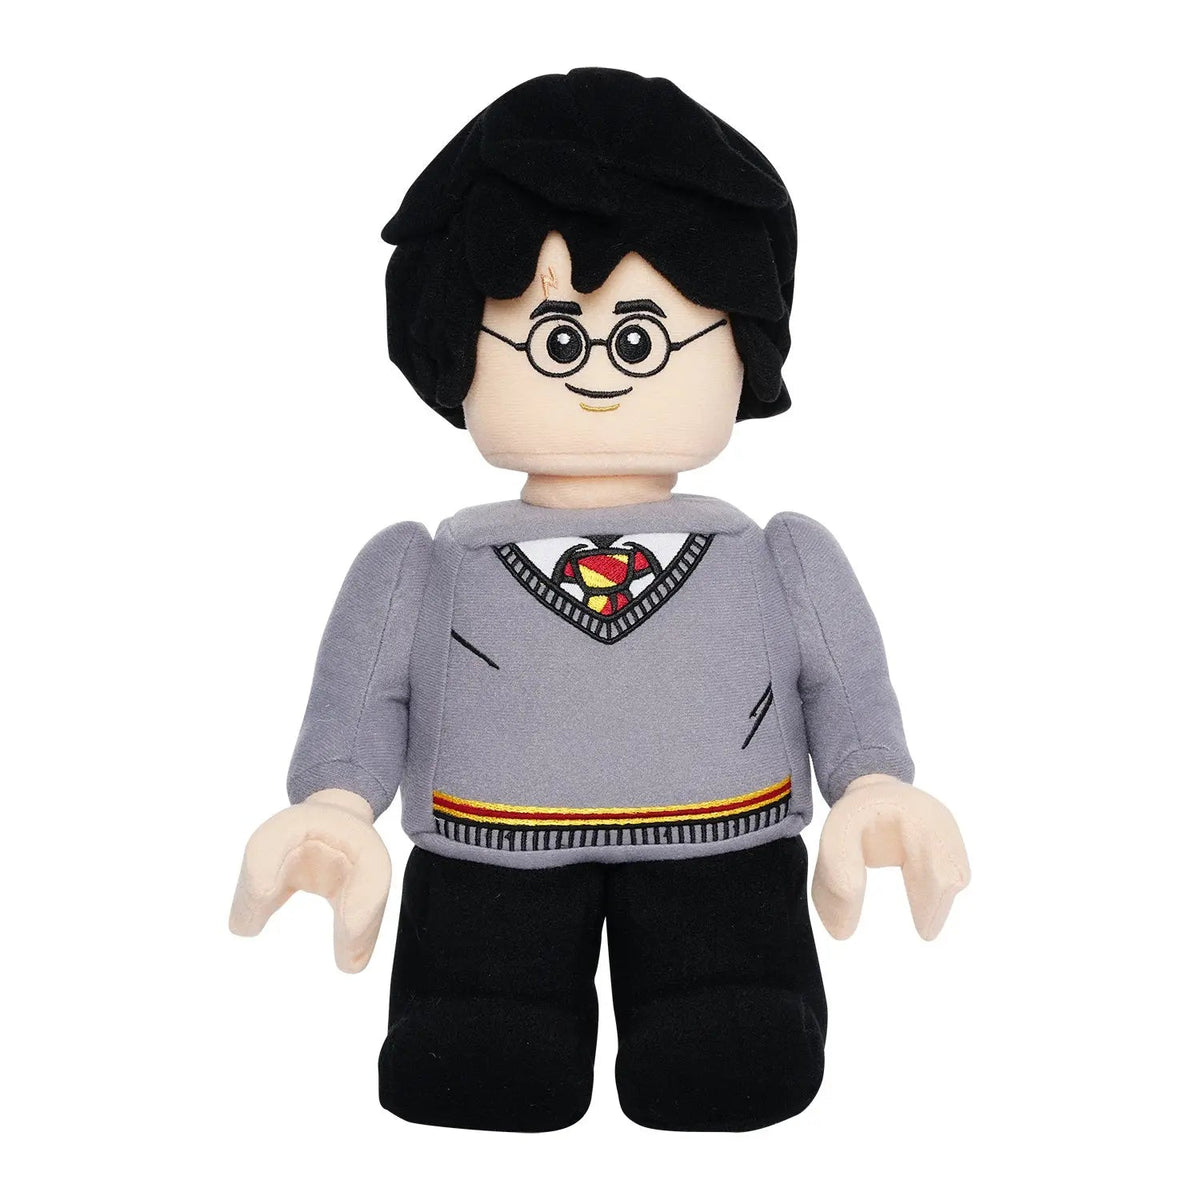 Lego Harry Potter: Lord Voldemort Plush Minifigure